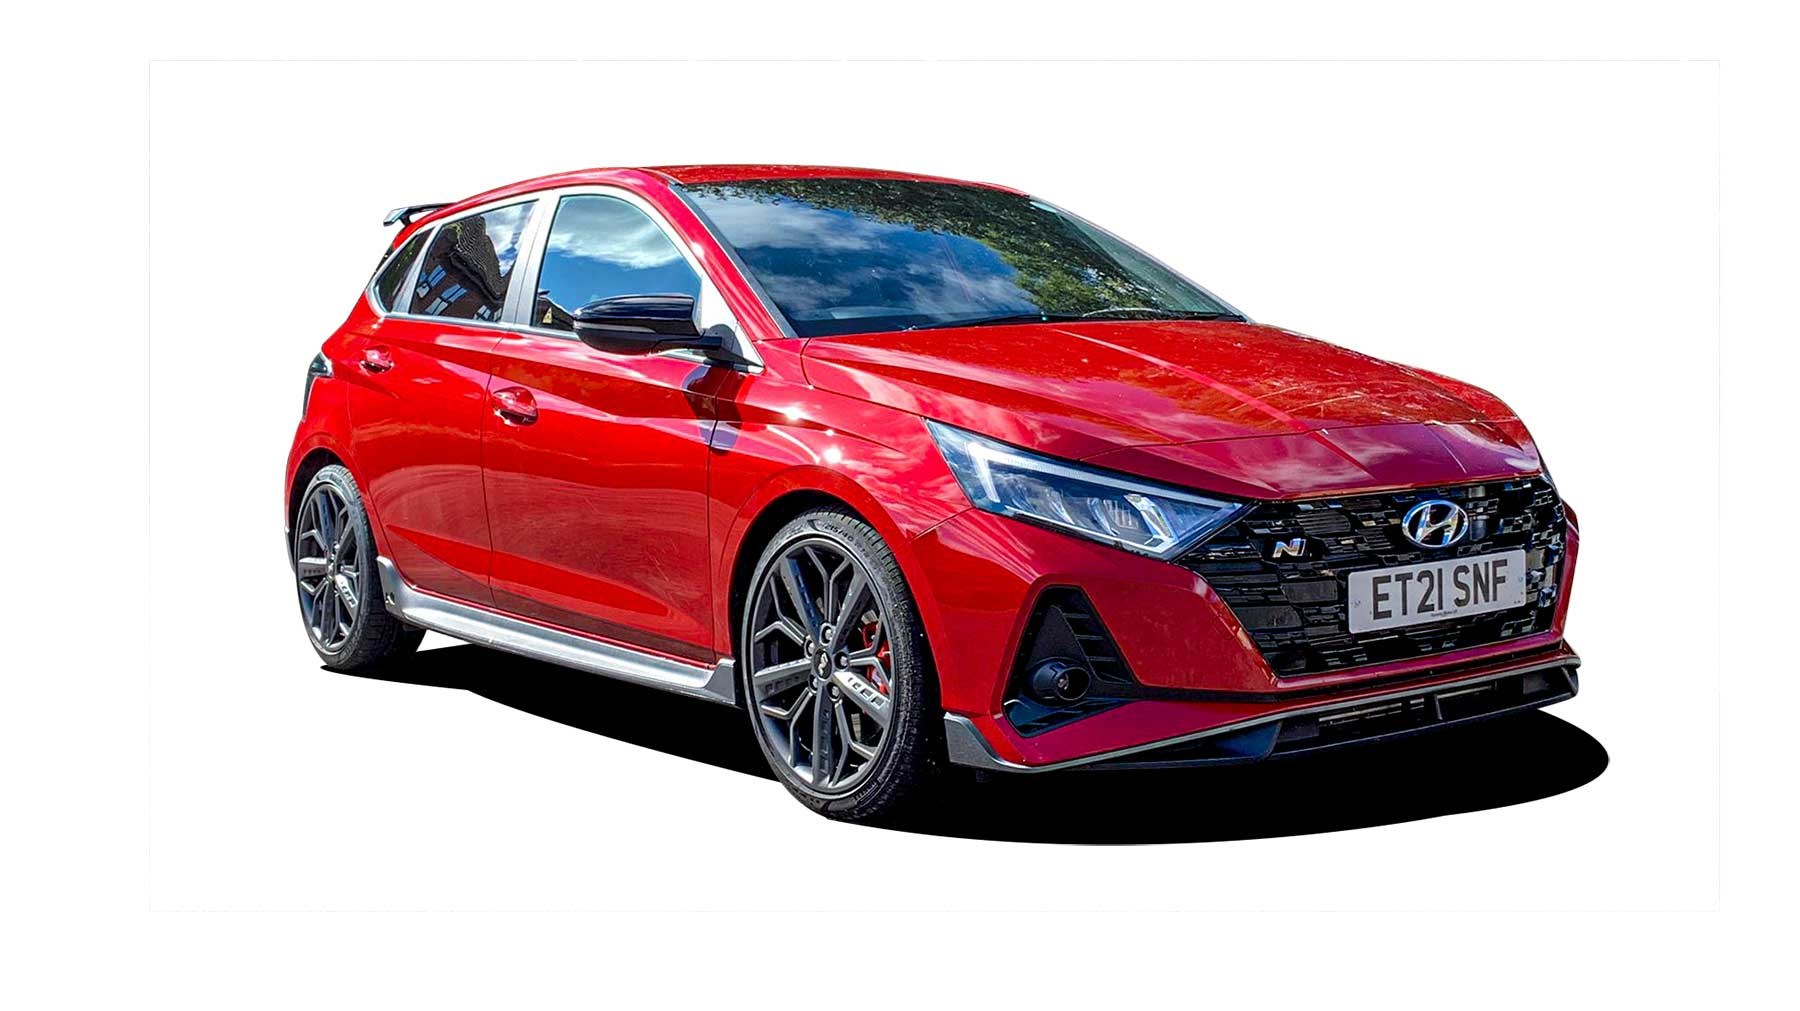 New 2021 Hyundai i20 N brings 201bhp for £24,995